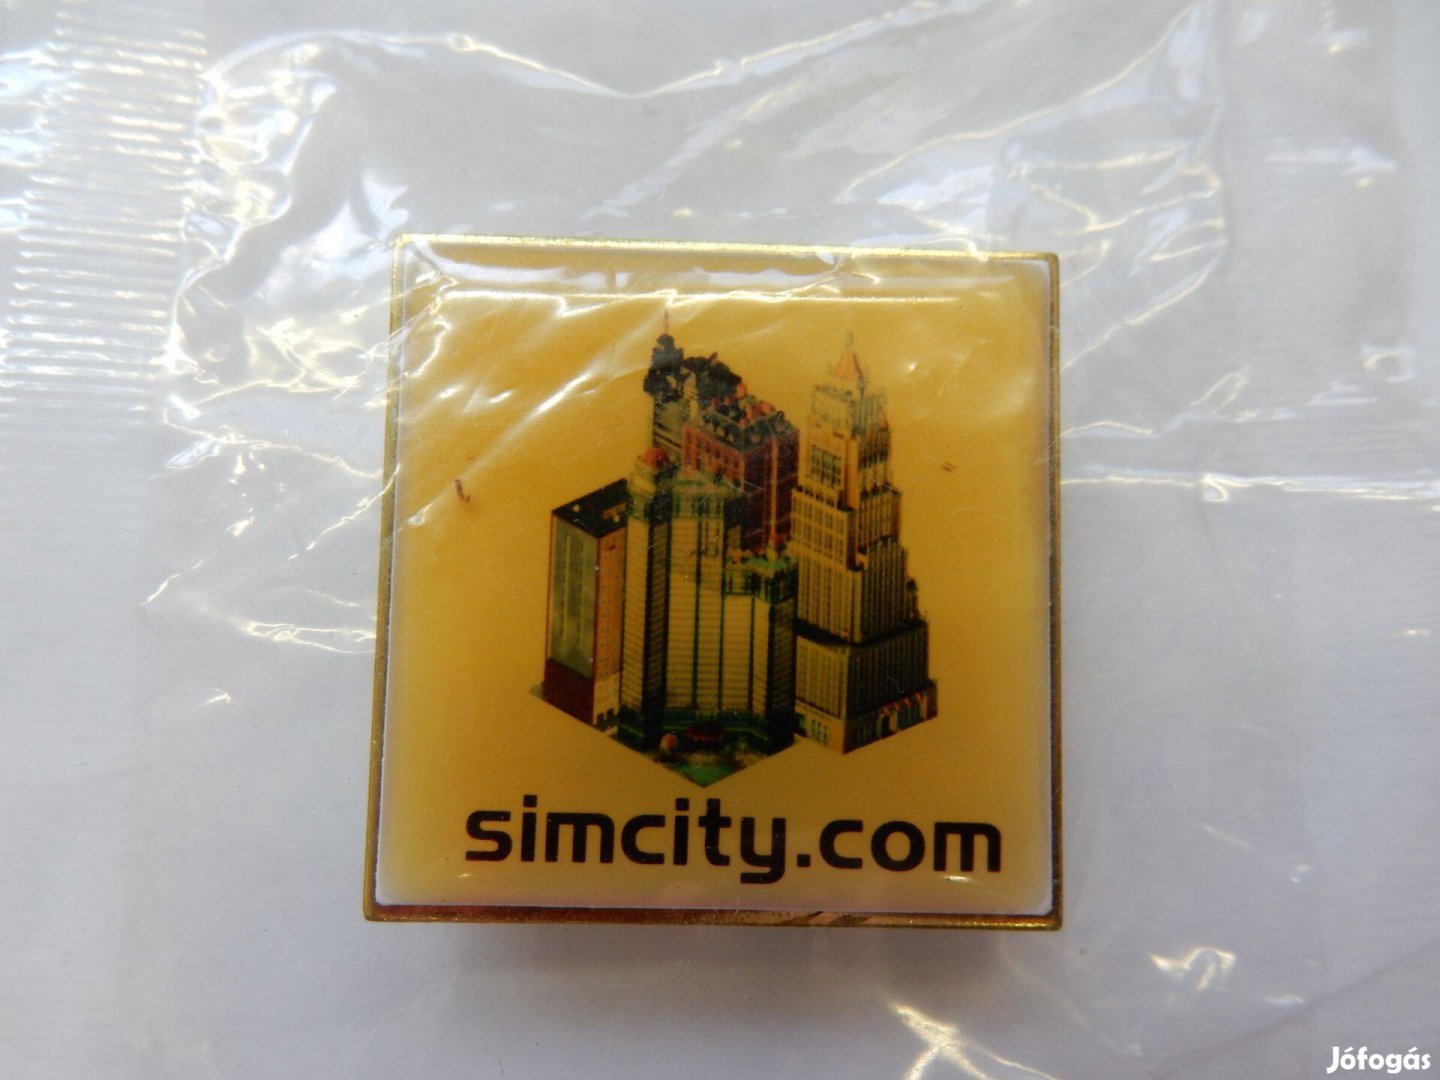 Sim city Simcity jelvény Game collectible Antik kitűző